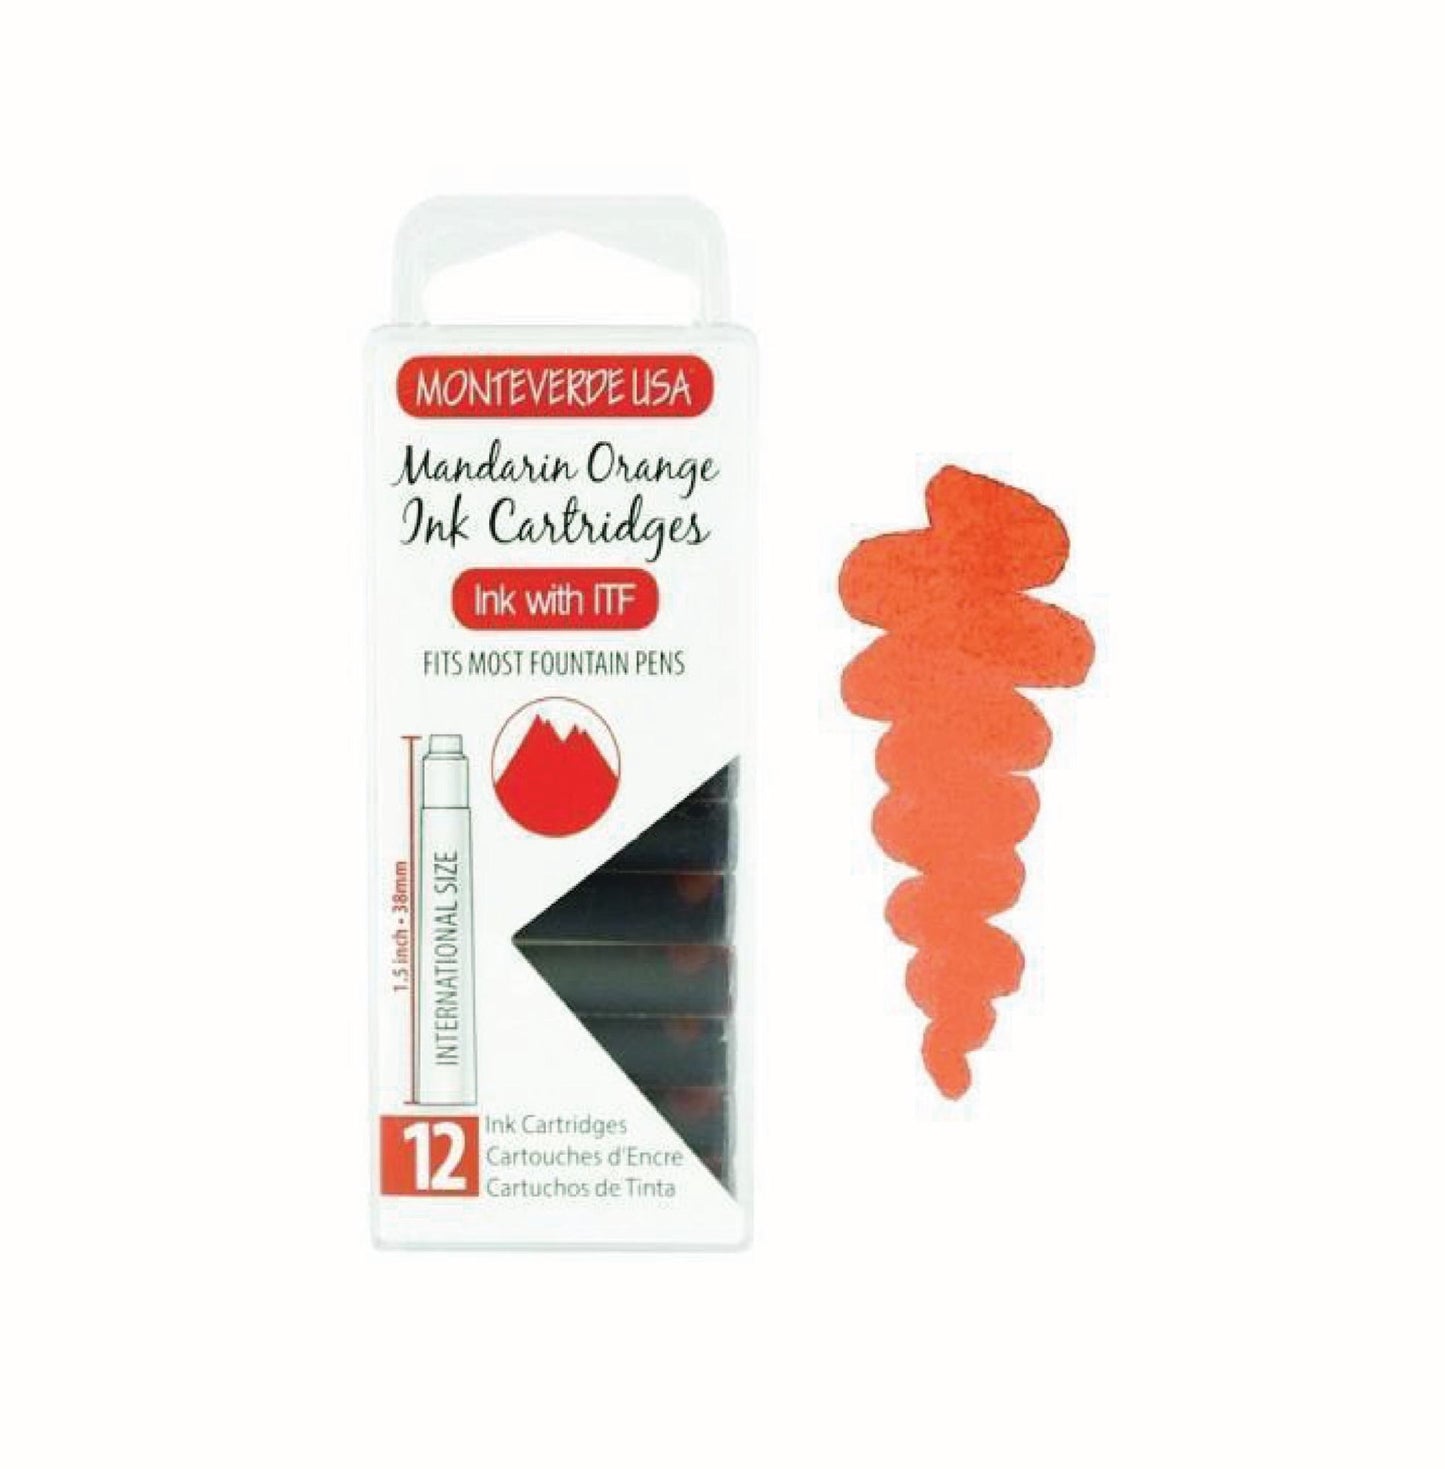 Monteverde Mandarin Orange Ink Cartridges (Set of 12)